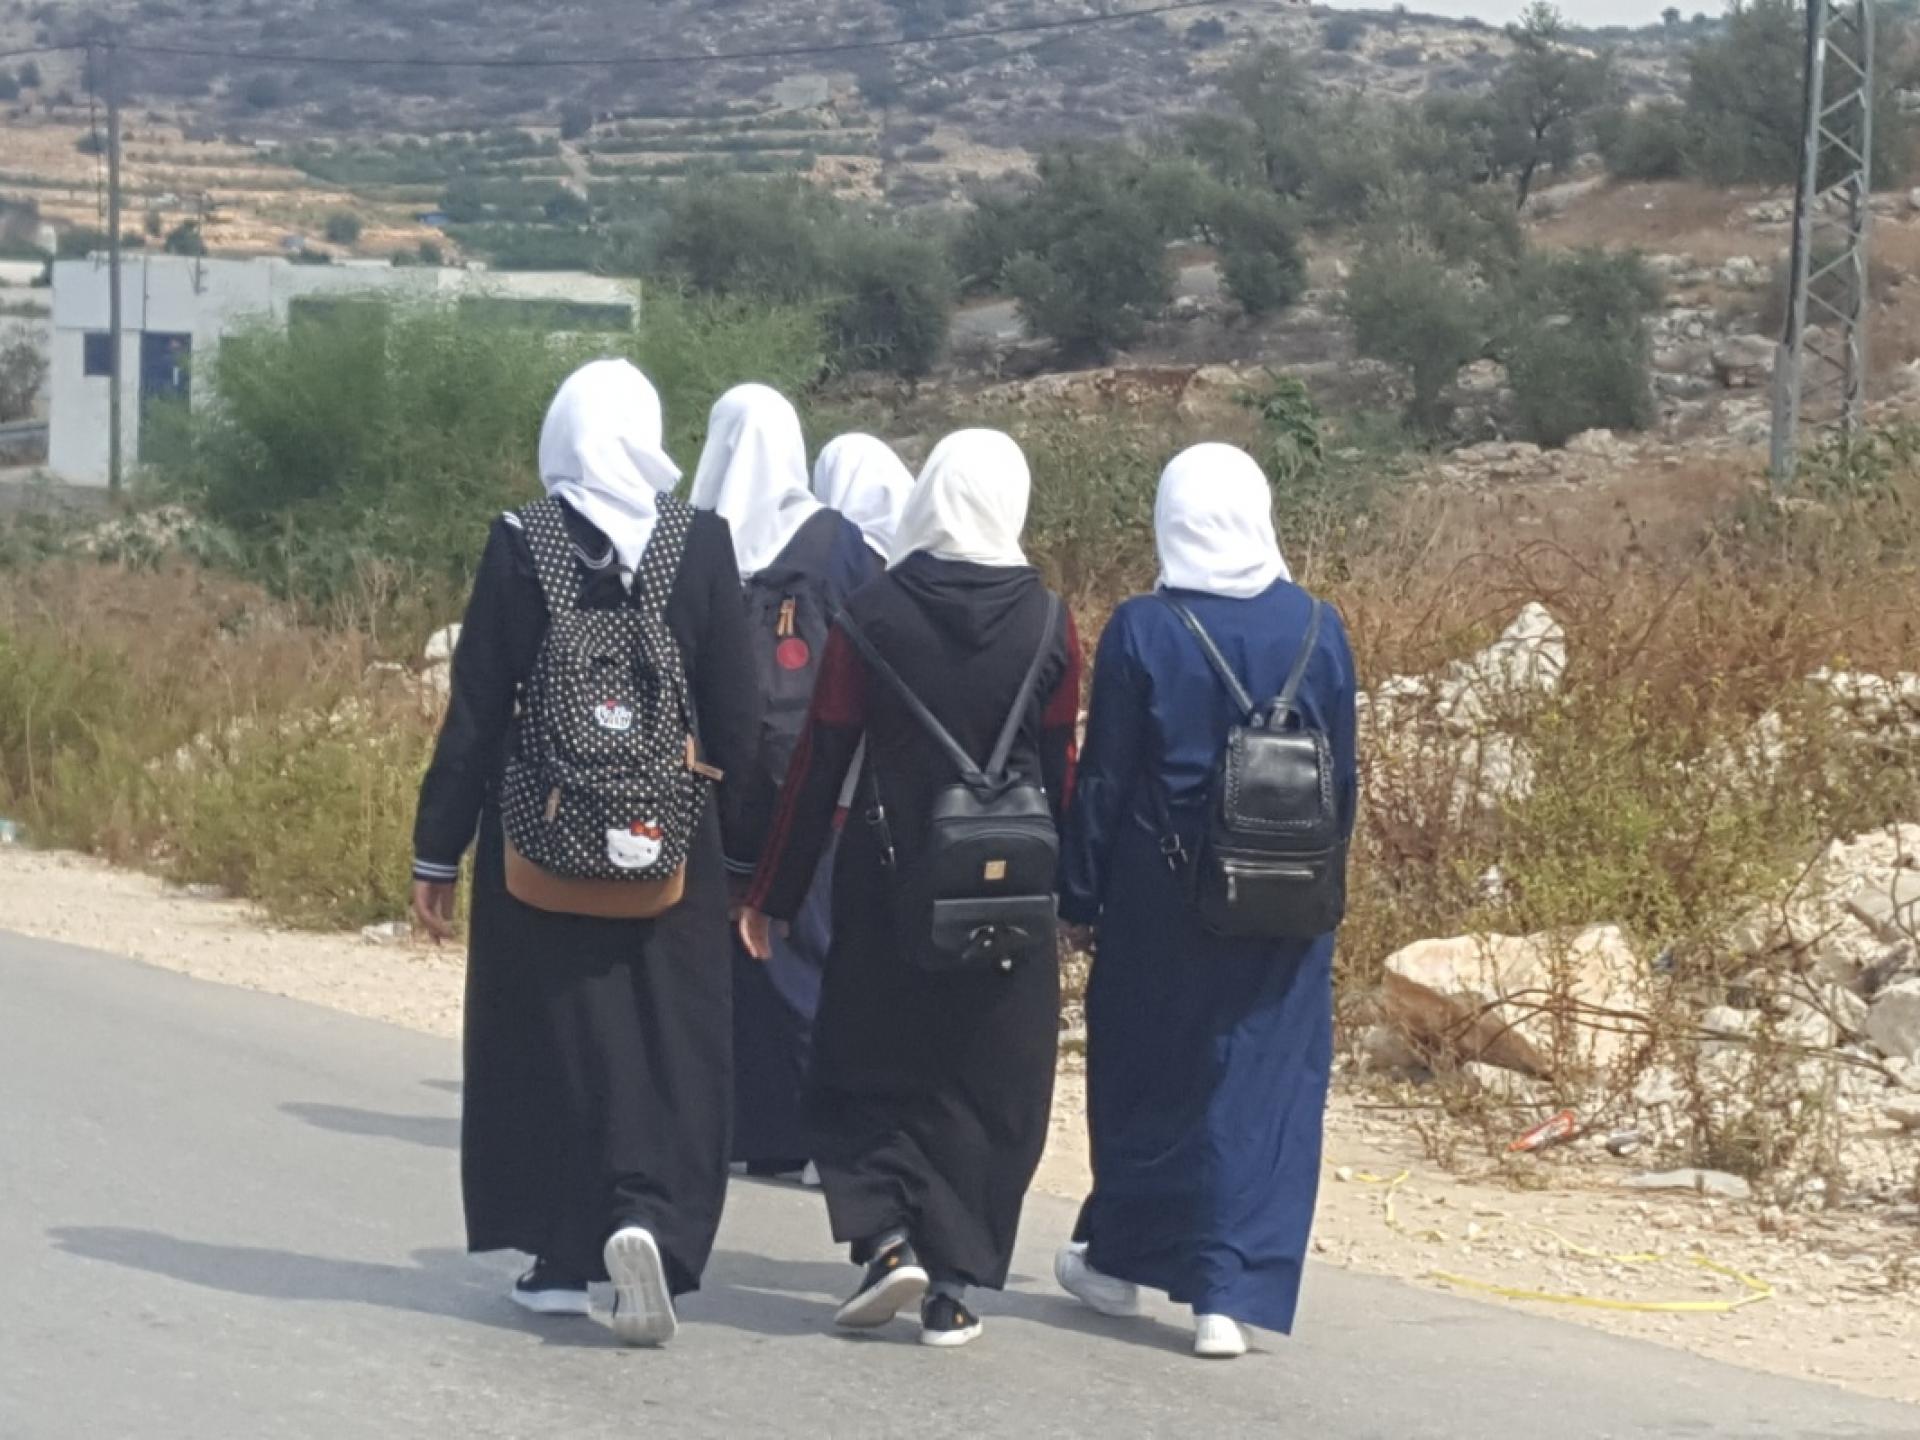  Schoolgirls on their way home